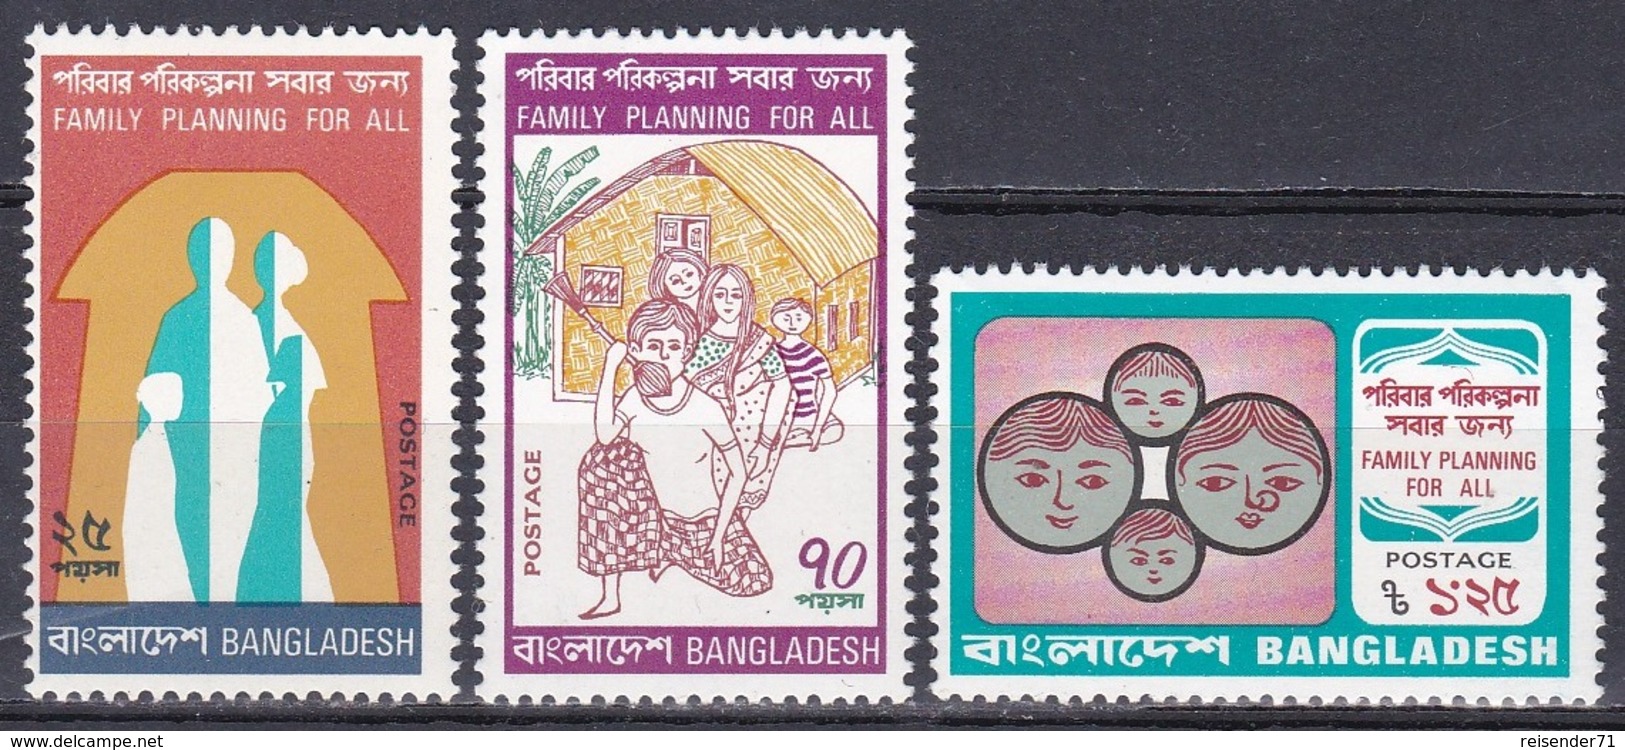 Bangladesch Bangladesh 1974 Gesellschaft Society Soziales Familie Familienplanung Family Planning, Mi. 52-4 ** - Bangladesch